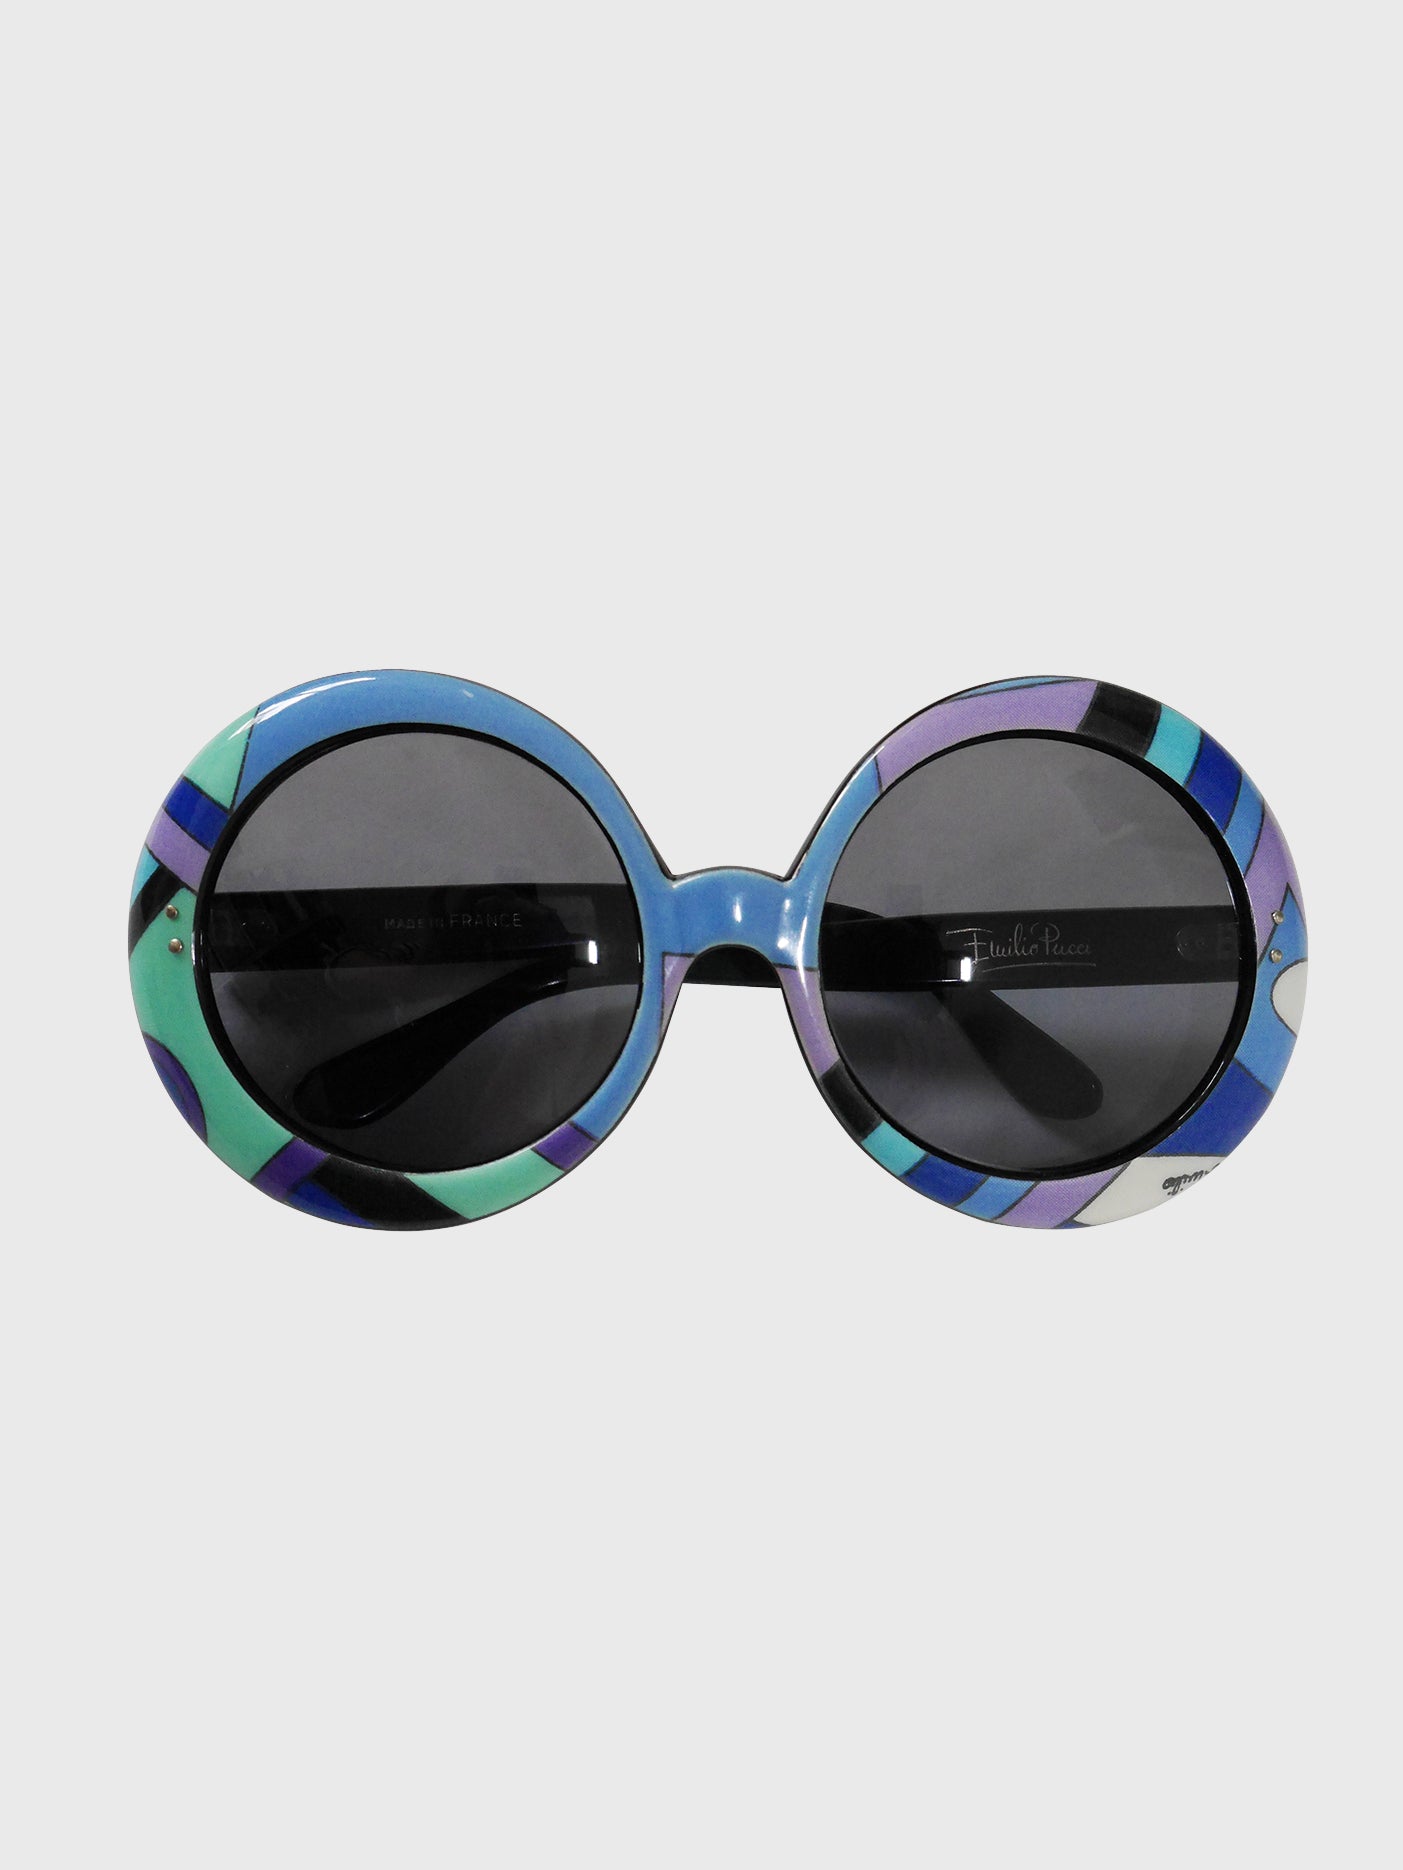 EMILIO PUCCI 1960s Vintage Round Oversized Sunglasses